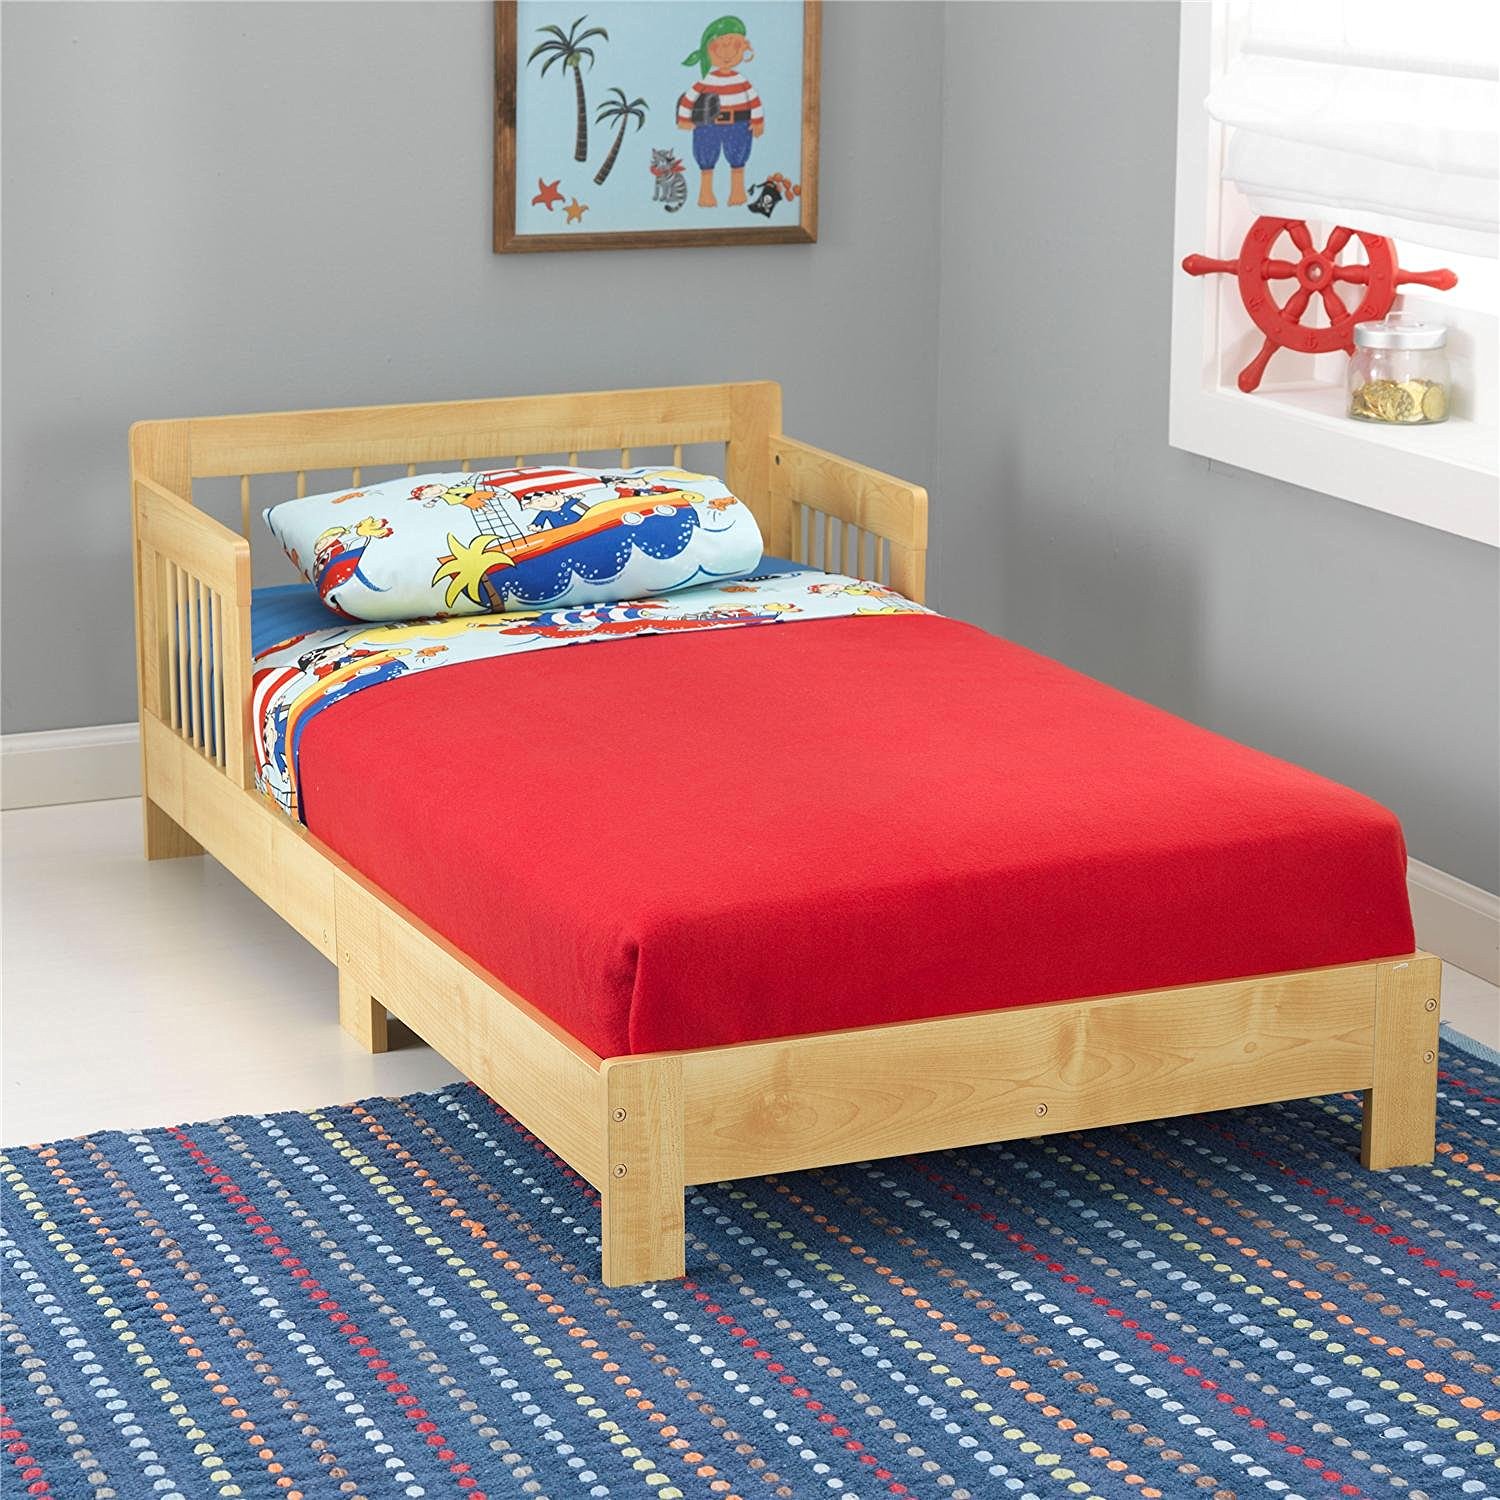 KidKraft Toddler Houston Bed, Natural, Only $49.91, You Save $46.08(48%)